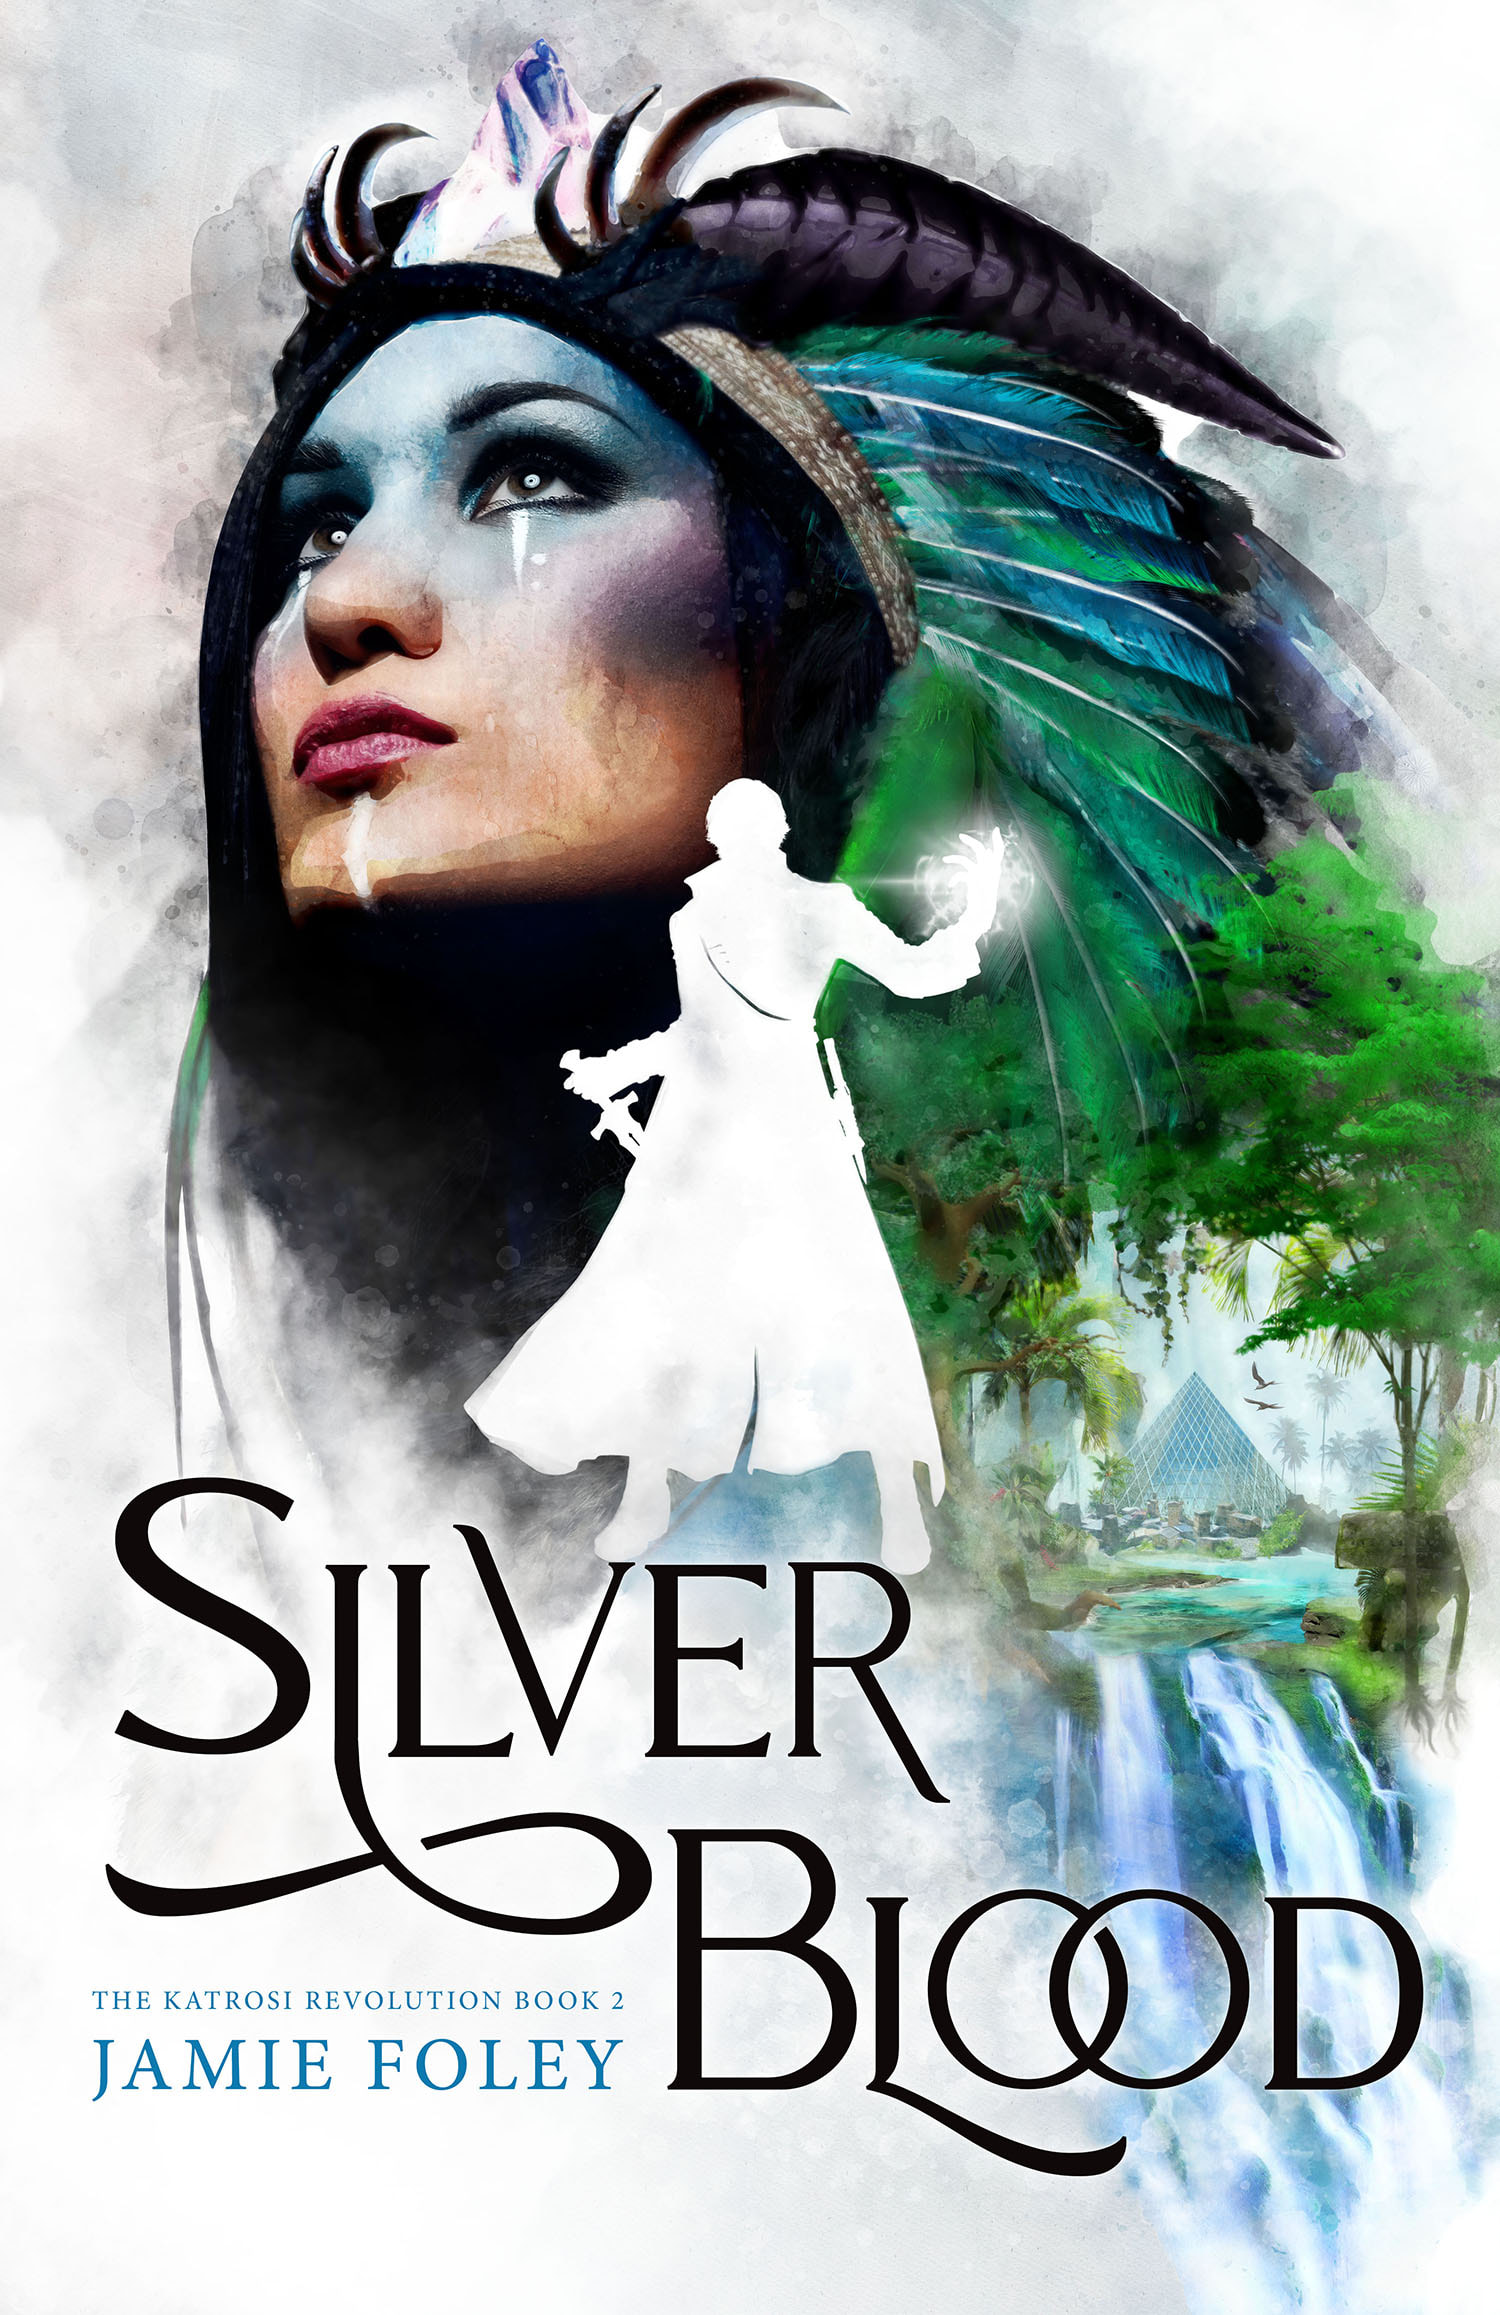 Silverblood: The Katrosi Revolution book 2 by Jamie Foley